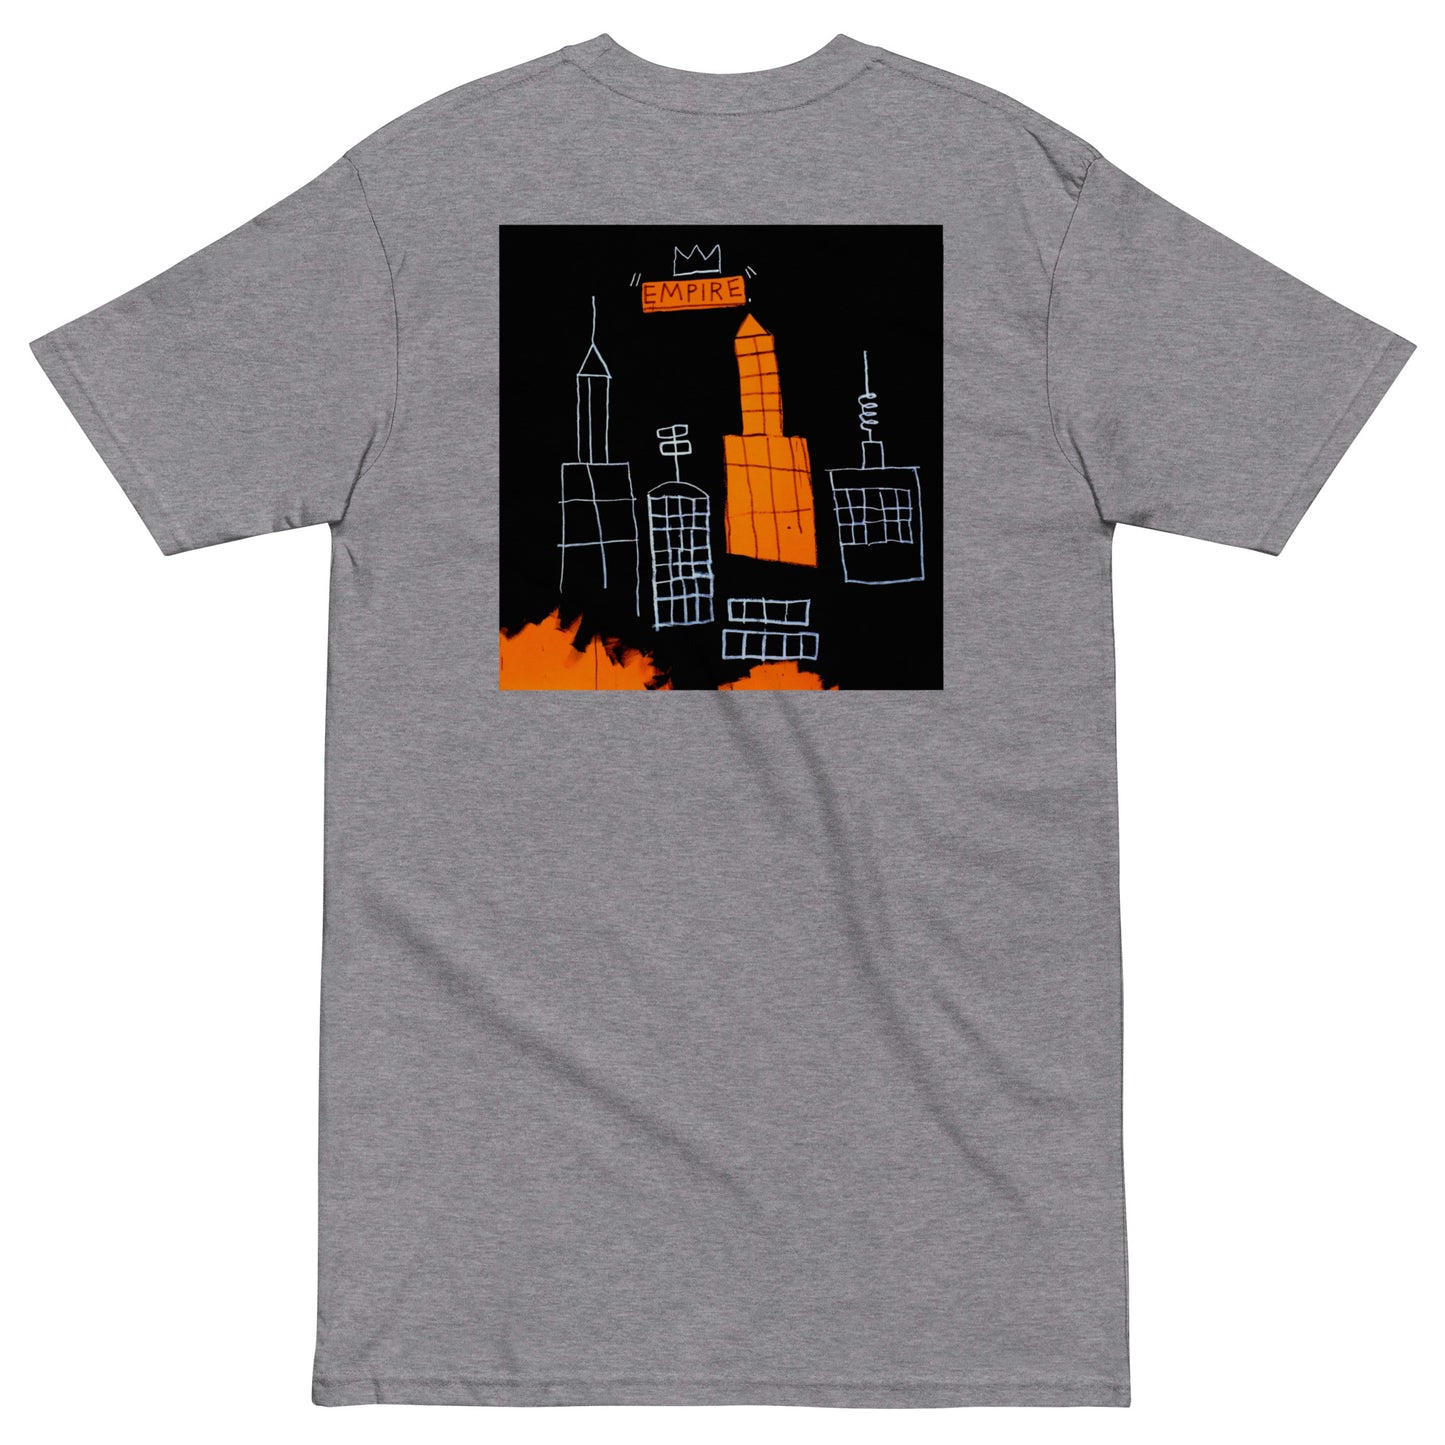 Jean-Michel Basquiat "Mecca" 1982 Artwork Embroidered + Printed Premium Streetwear T-shirt Grey